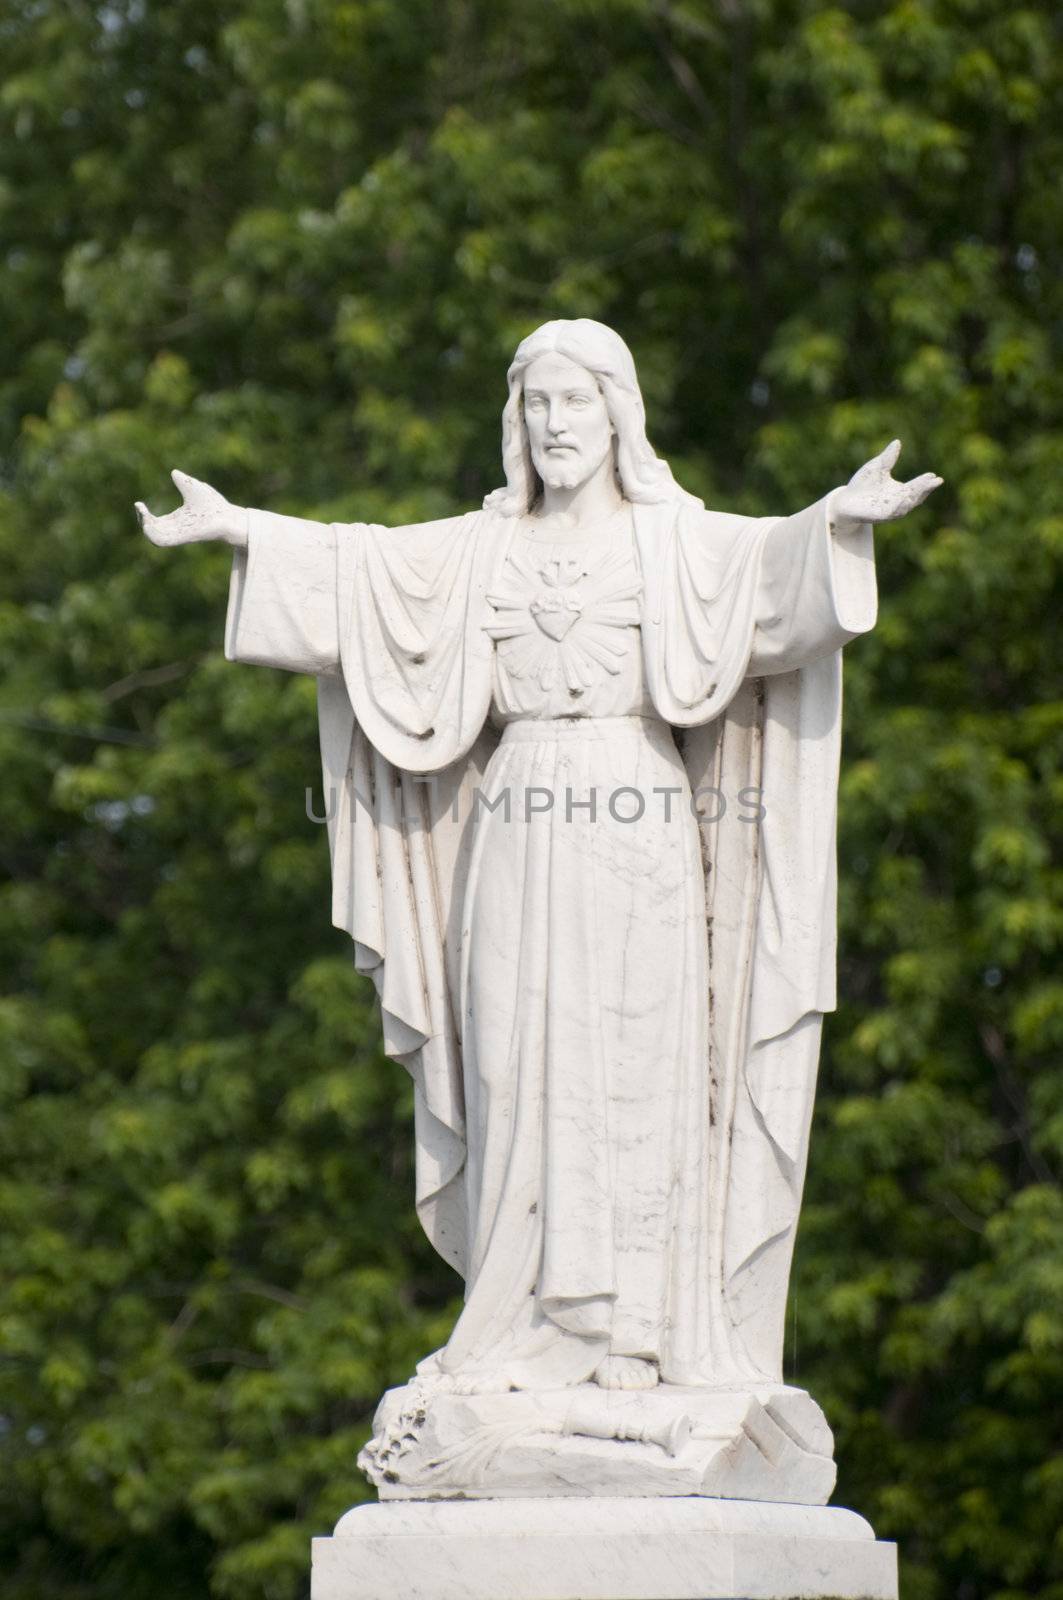 Jesus Christ Statue by Gordo25